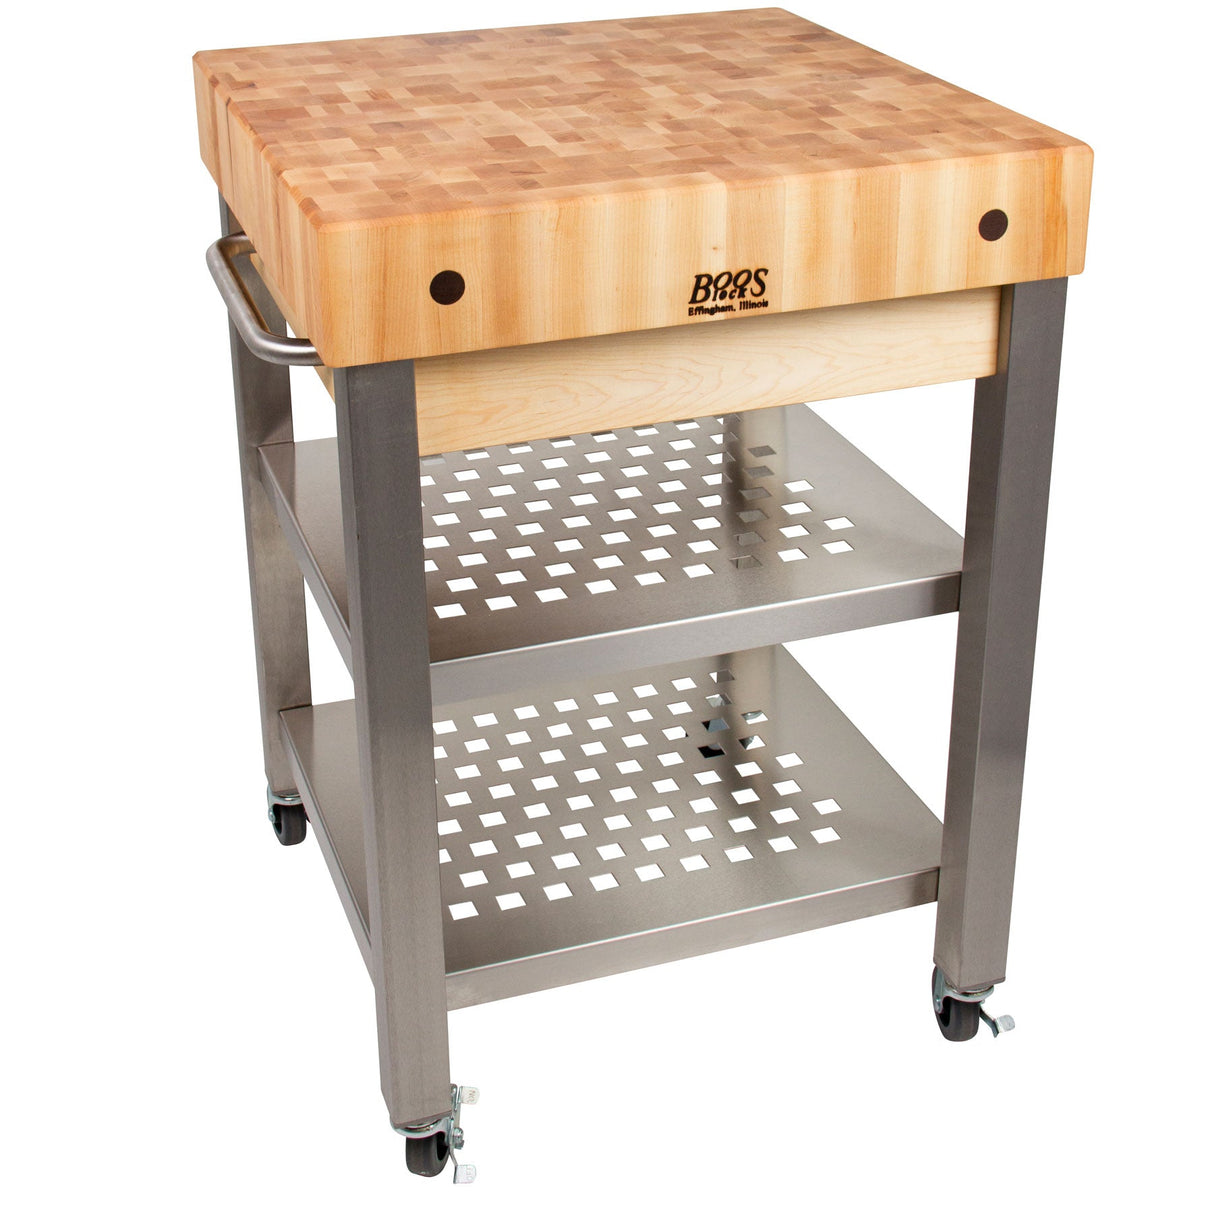 John Boos CUCT14 Cucina Americana Technica Kitchen Cart with Wood Top Counter Depth: 4"